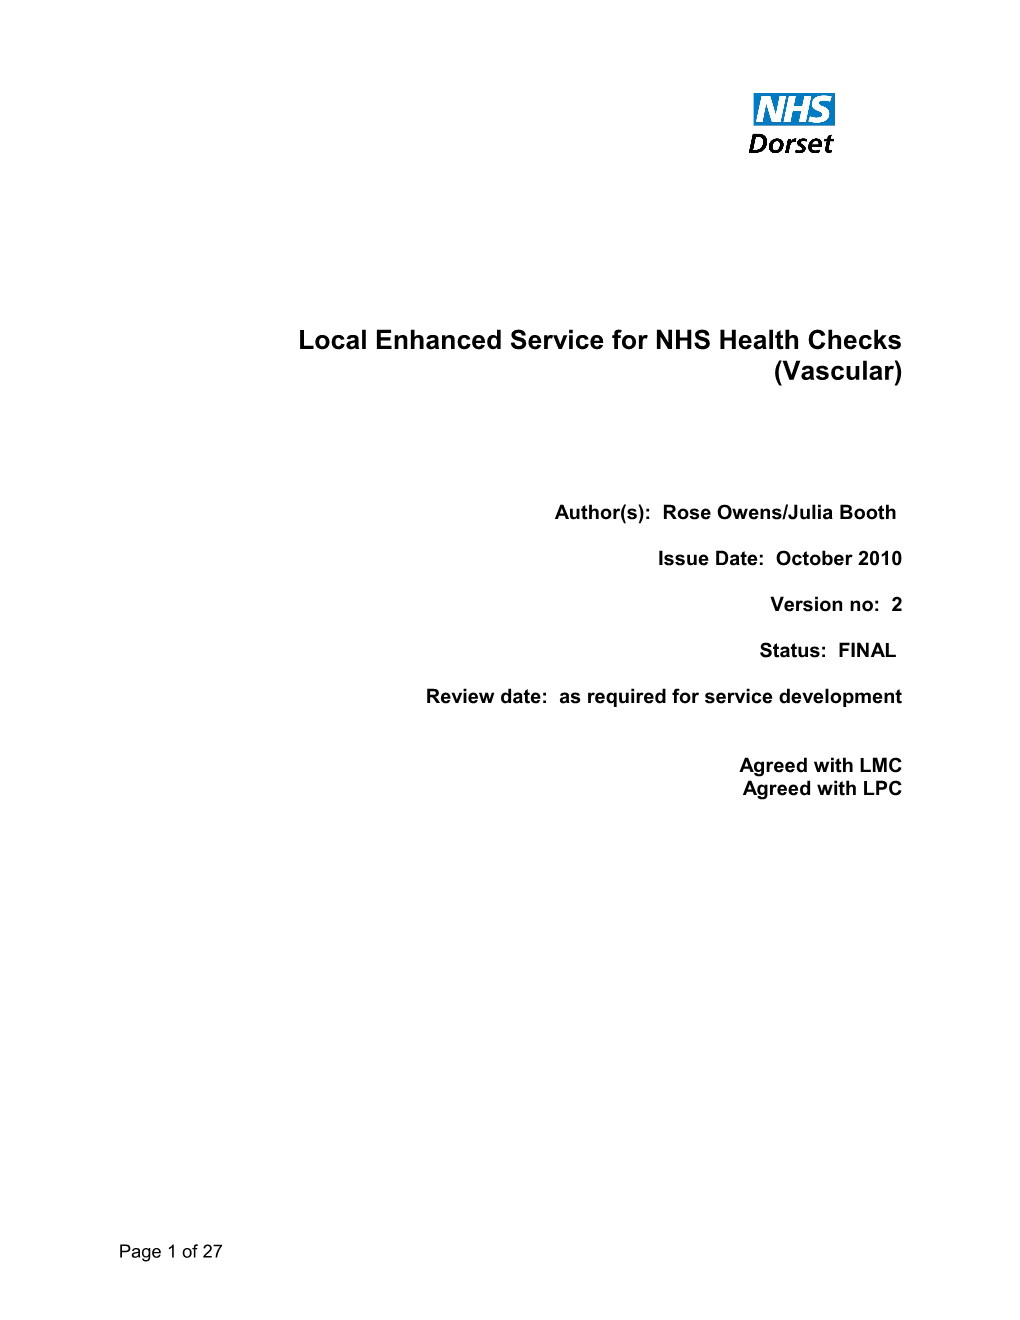 Local Enhanced Service for NHS Health Checks (Vascular)